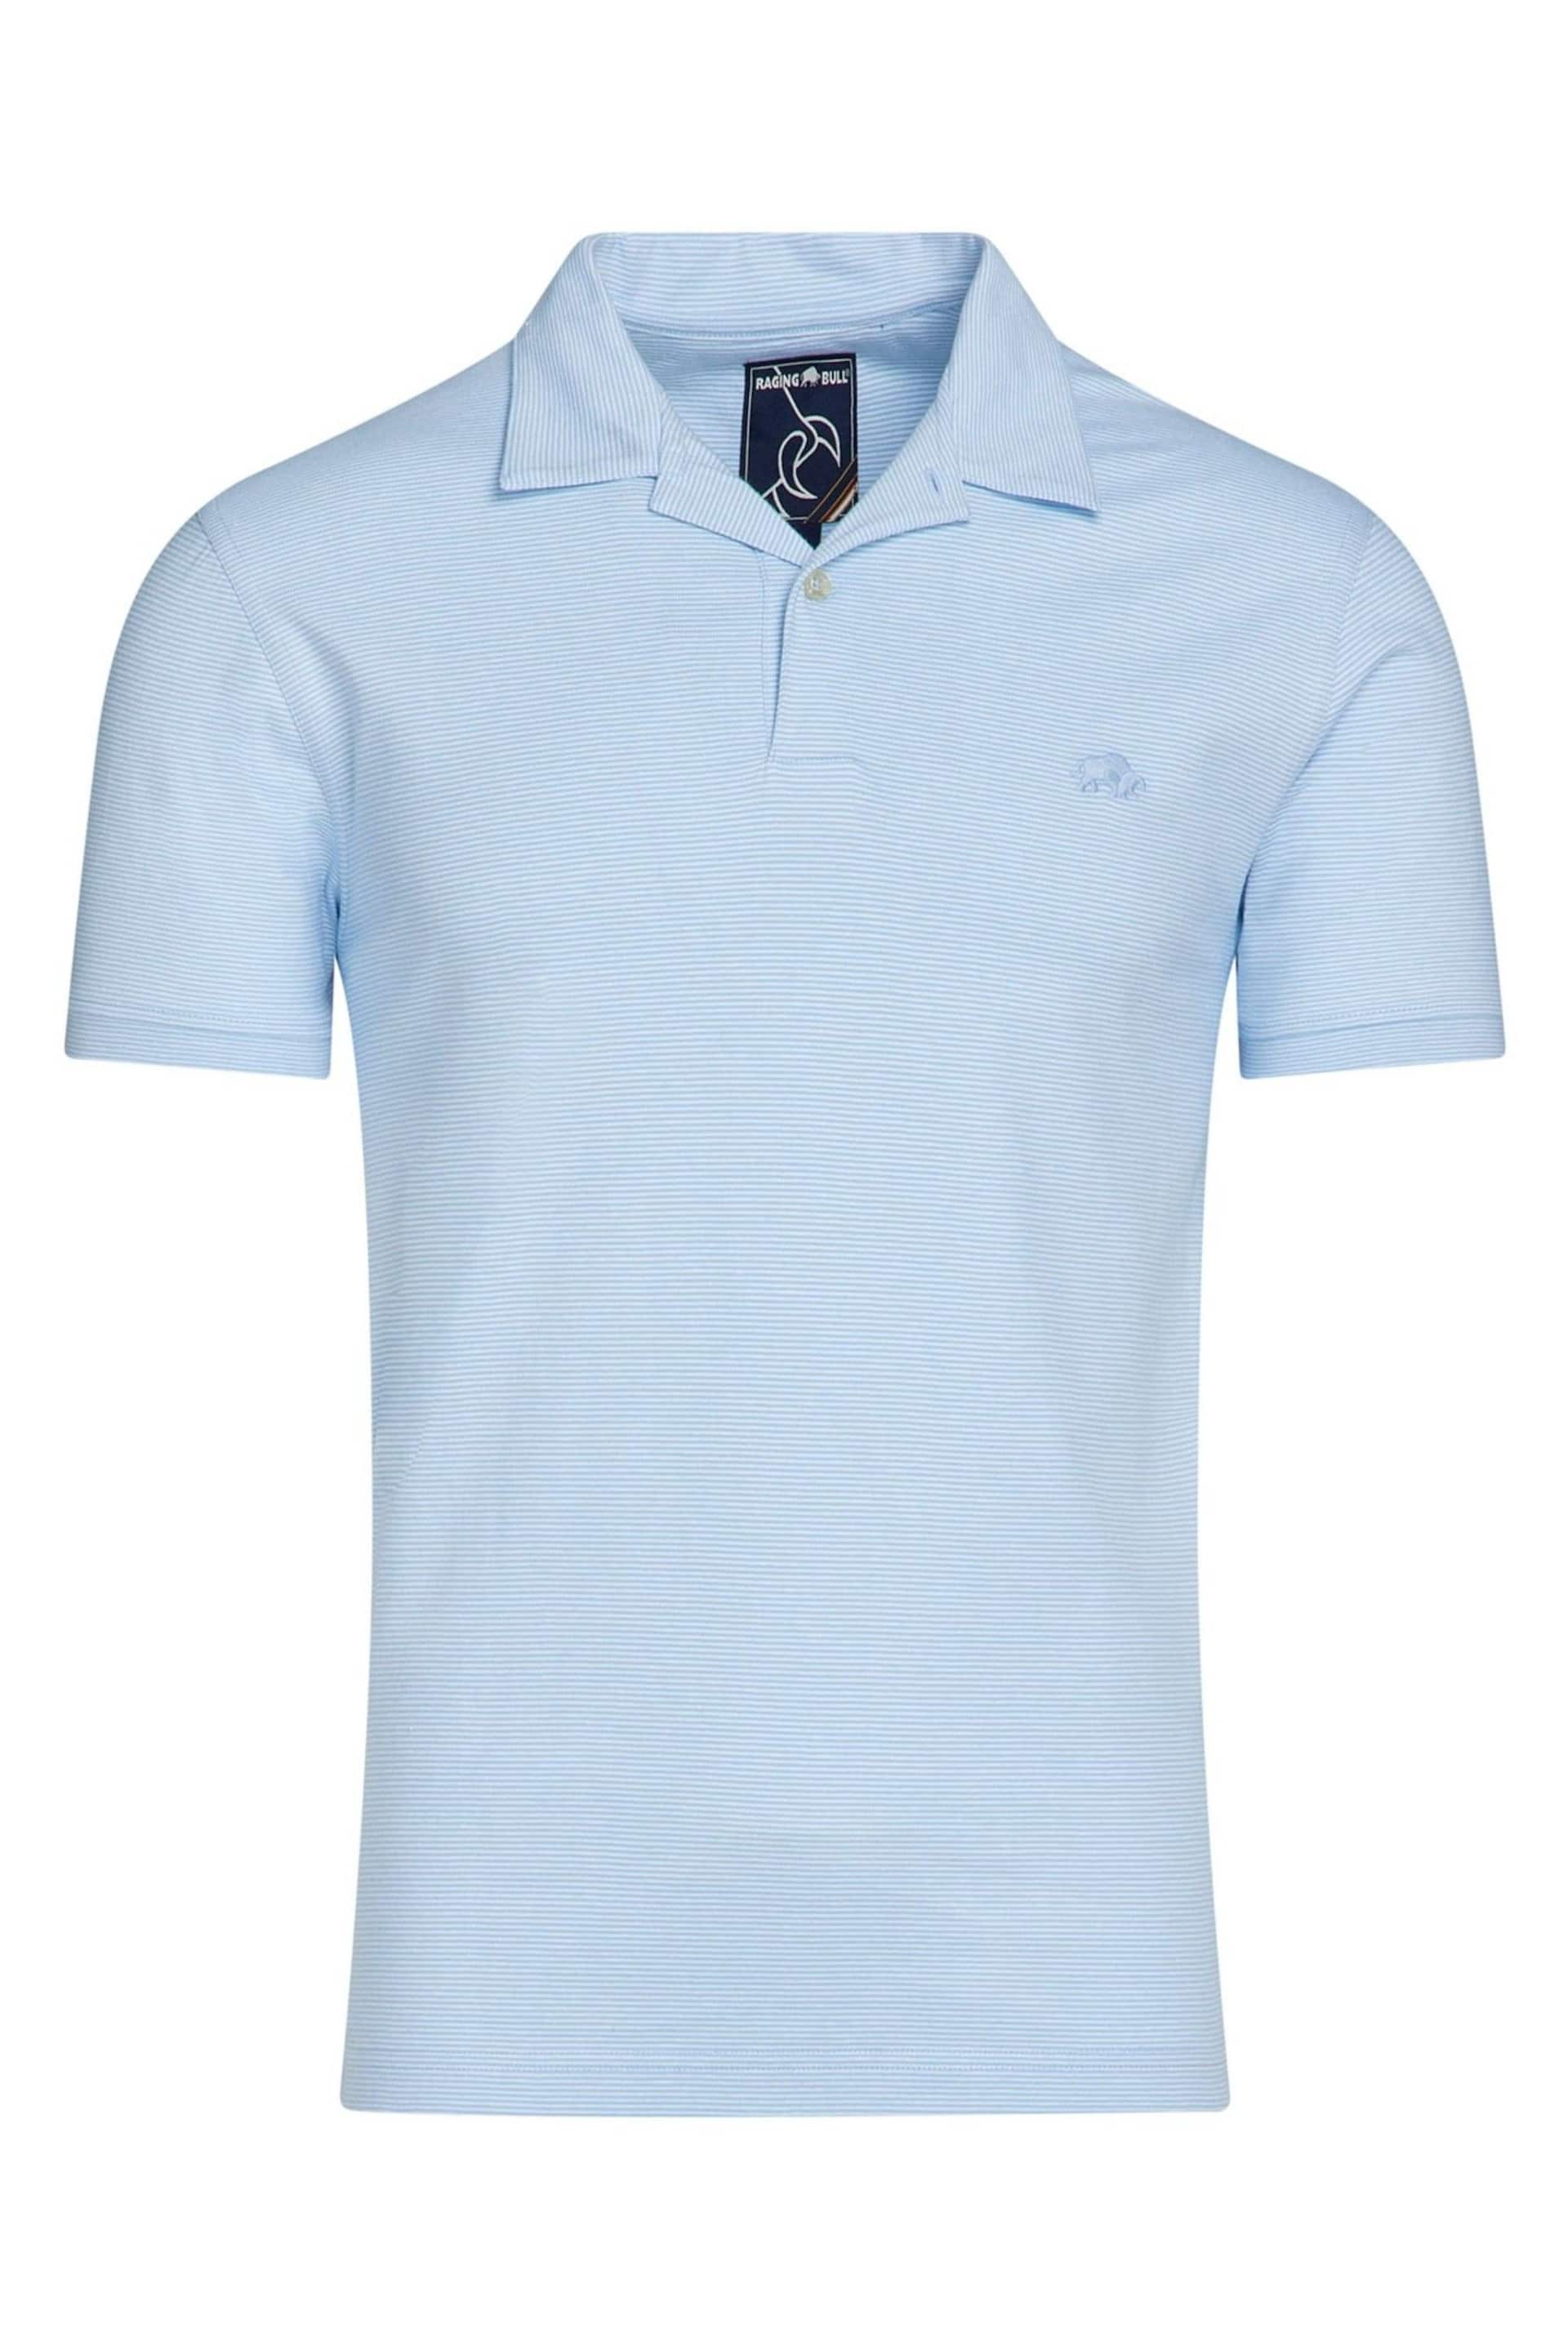 Raging Bull Blue Feeder Stripe Jersey Polo Shirt - Image 6 of 7